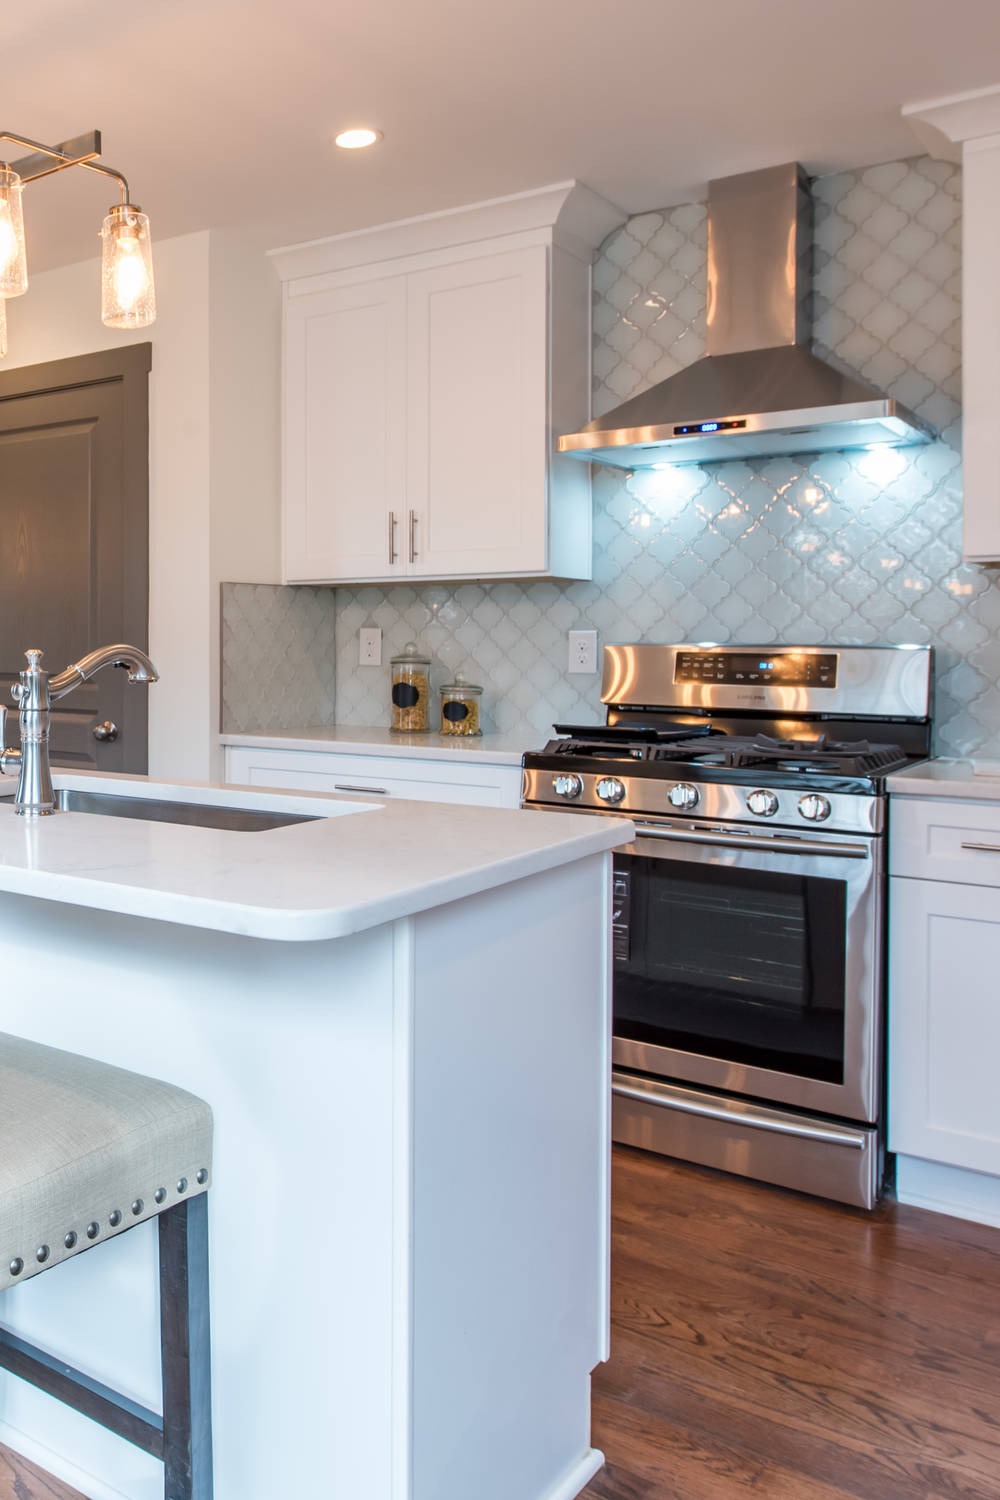 White Arabesque Pattern Gray Kitchen Backsplash Tiles Appliances Beveled Shaped Glass Patterns Idea Cool